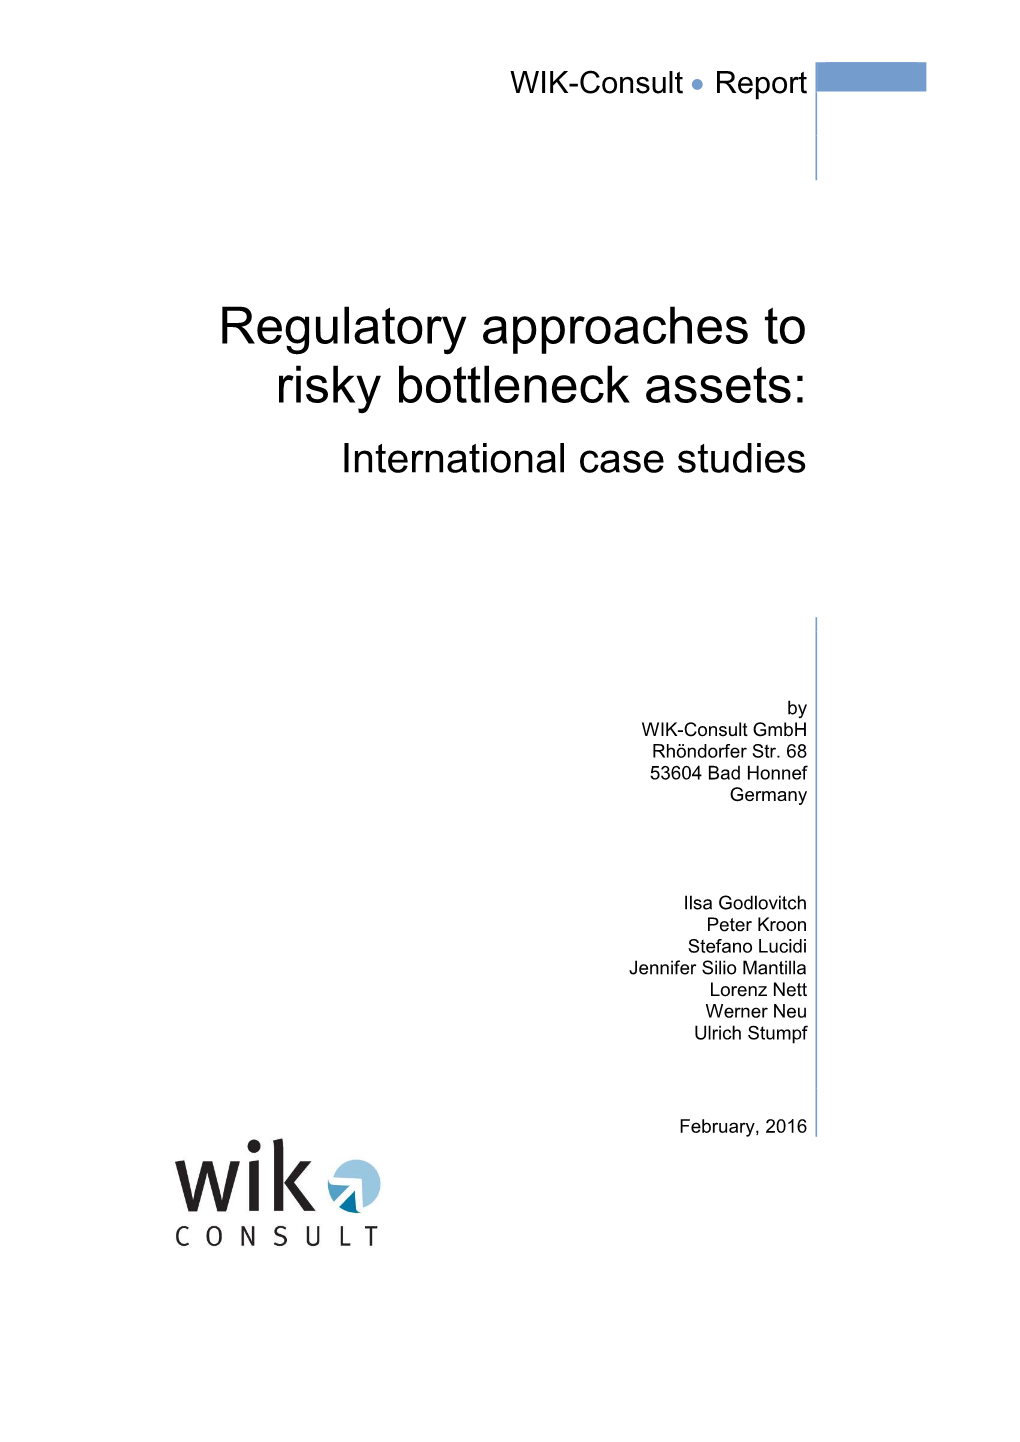 WIK-Consult Regulatory Approaches to Risky Bottleneck Assets